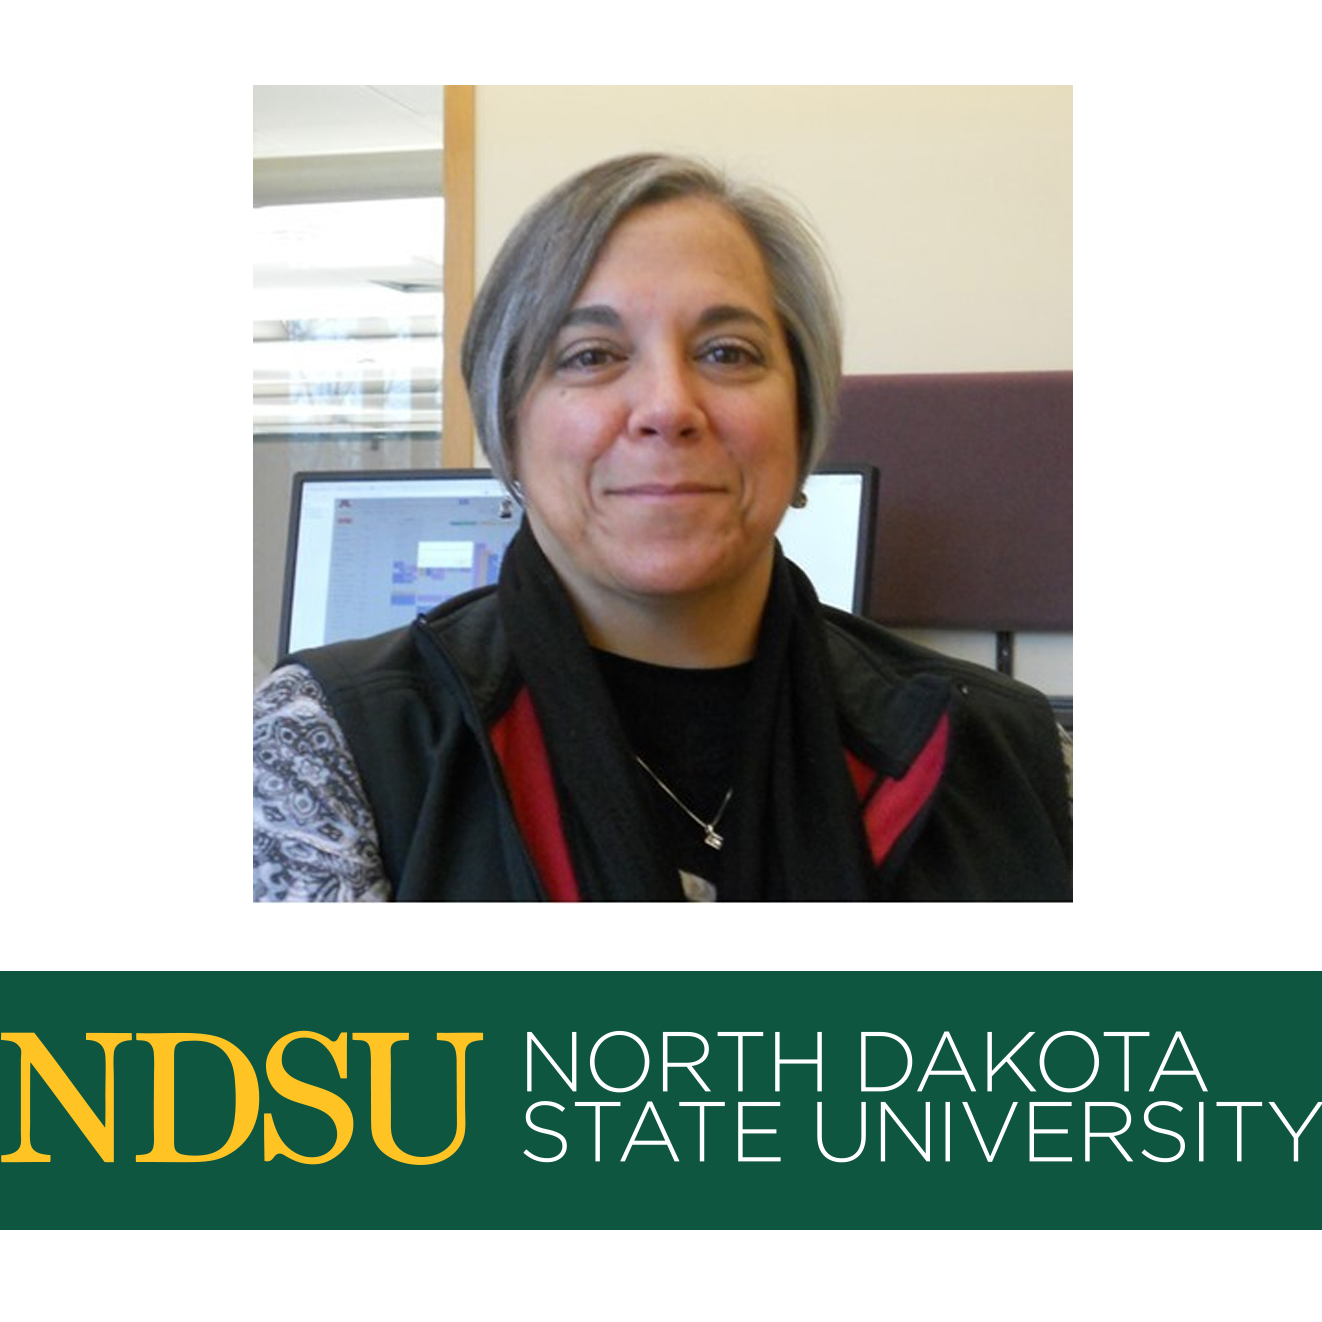 A photo of Jolie Graybill above the North Dakota State University logo.